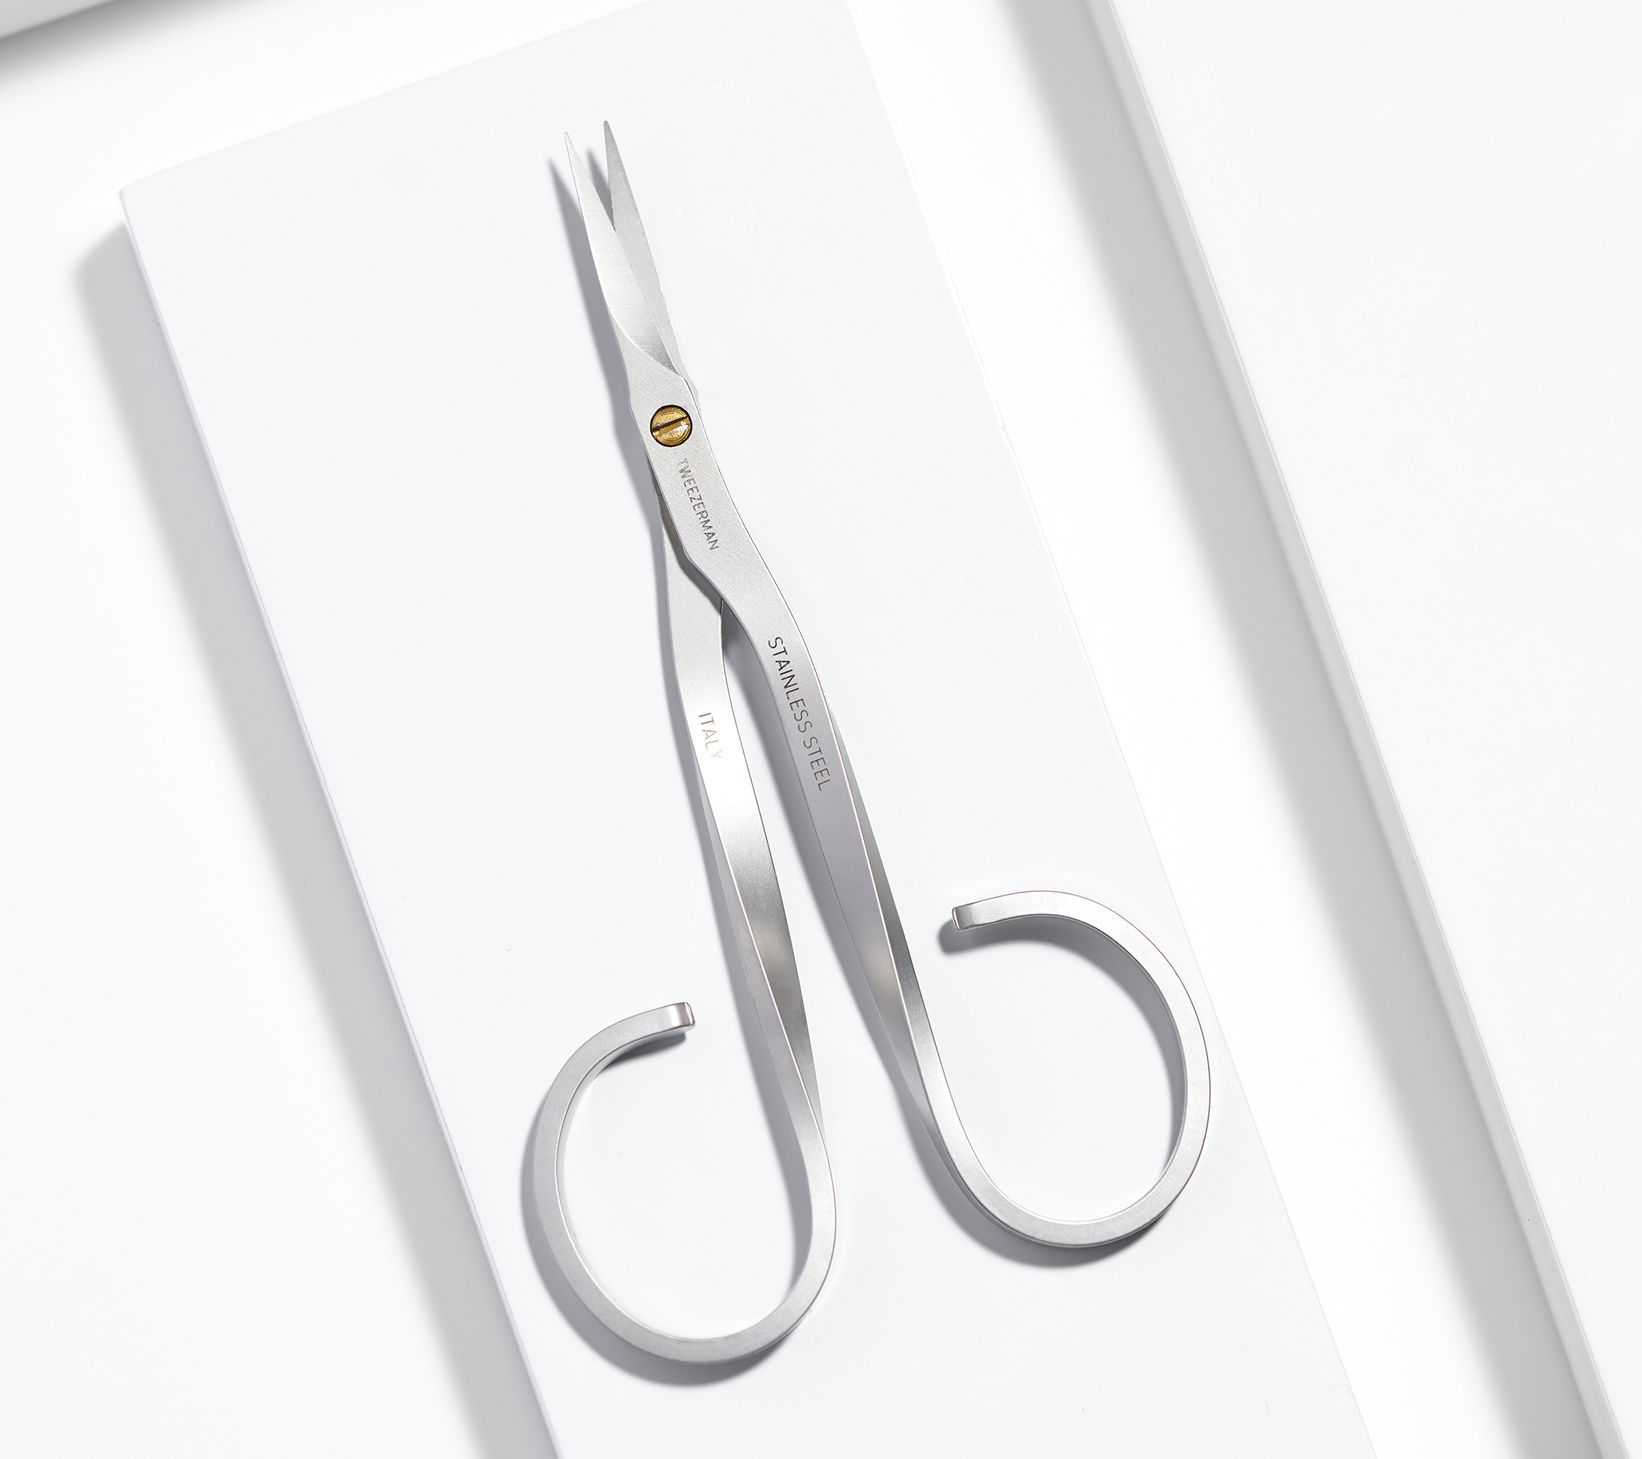  Tweezerman Stainless Steel Nail Scissors : Nail Cutting  Scissors : Beauty & Personal Care